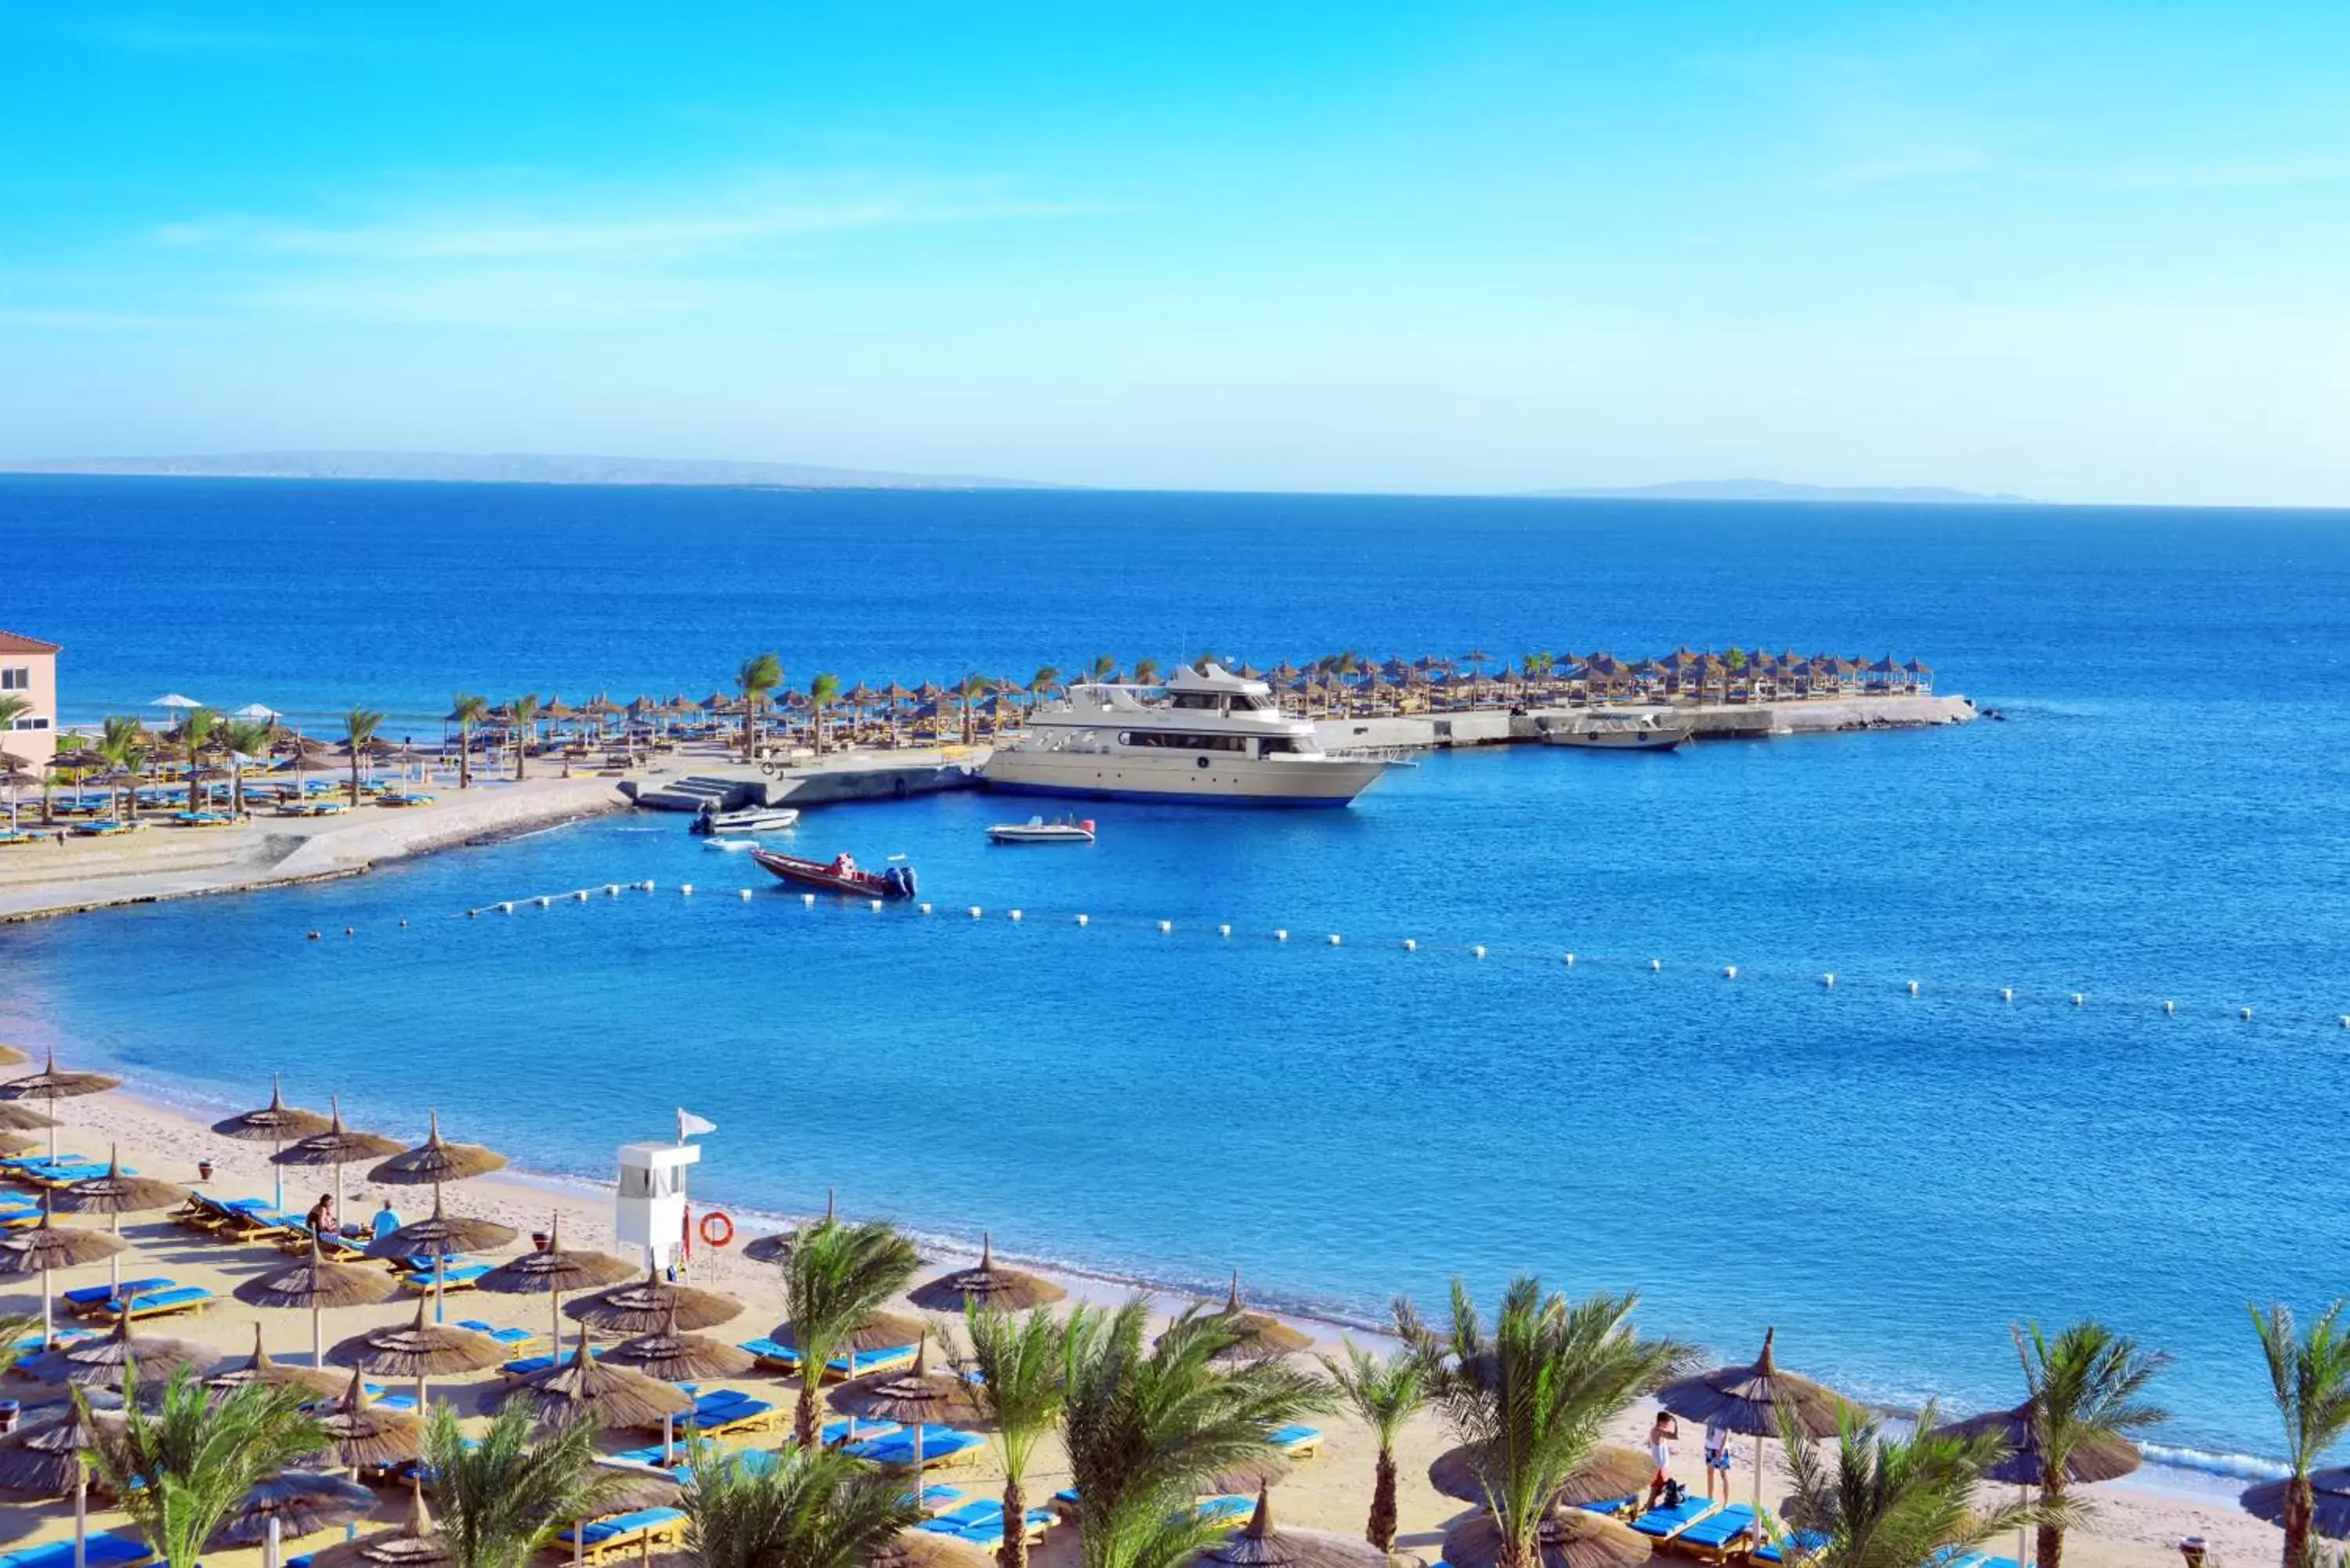 Day in Beach Albatros Resort - Hurghada